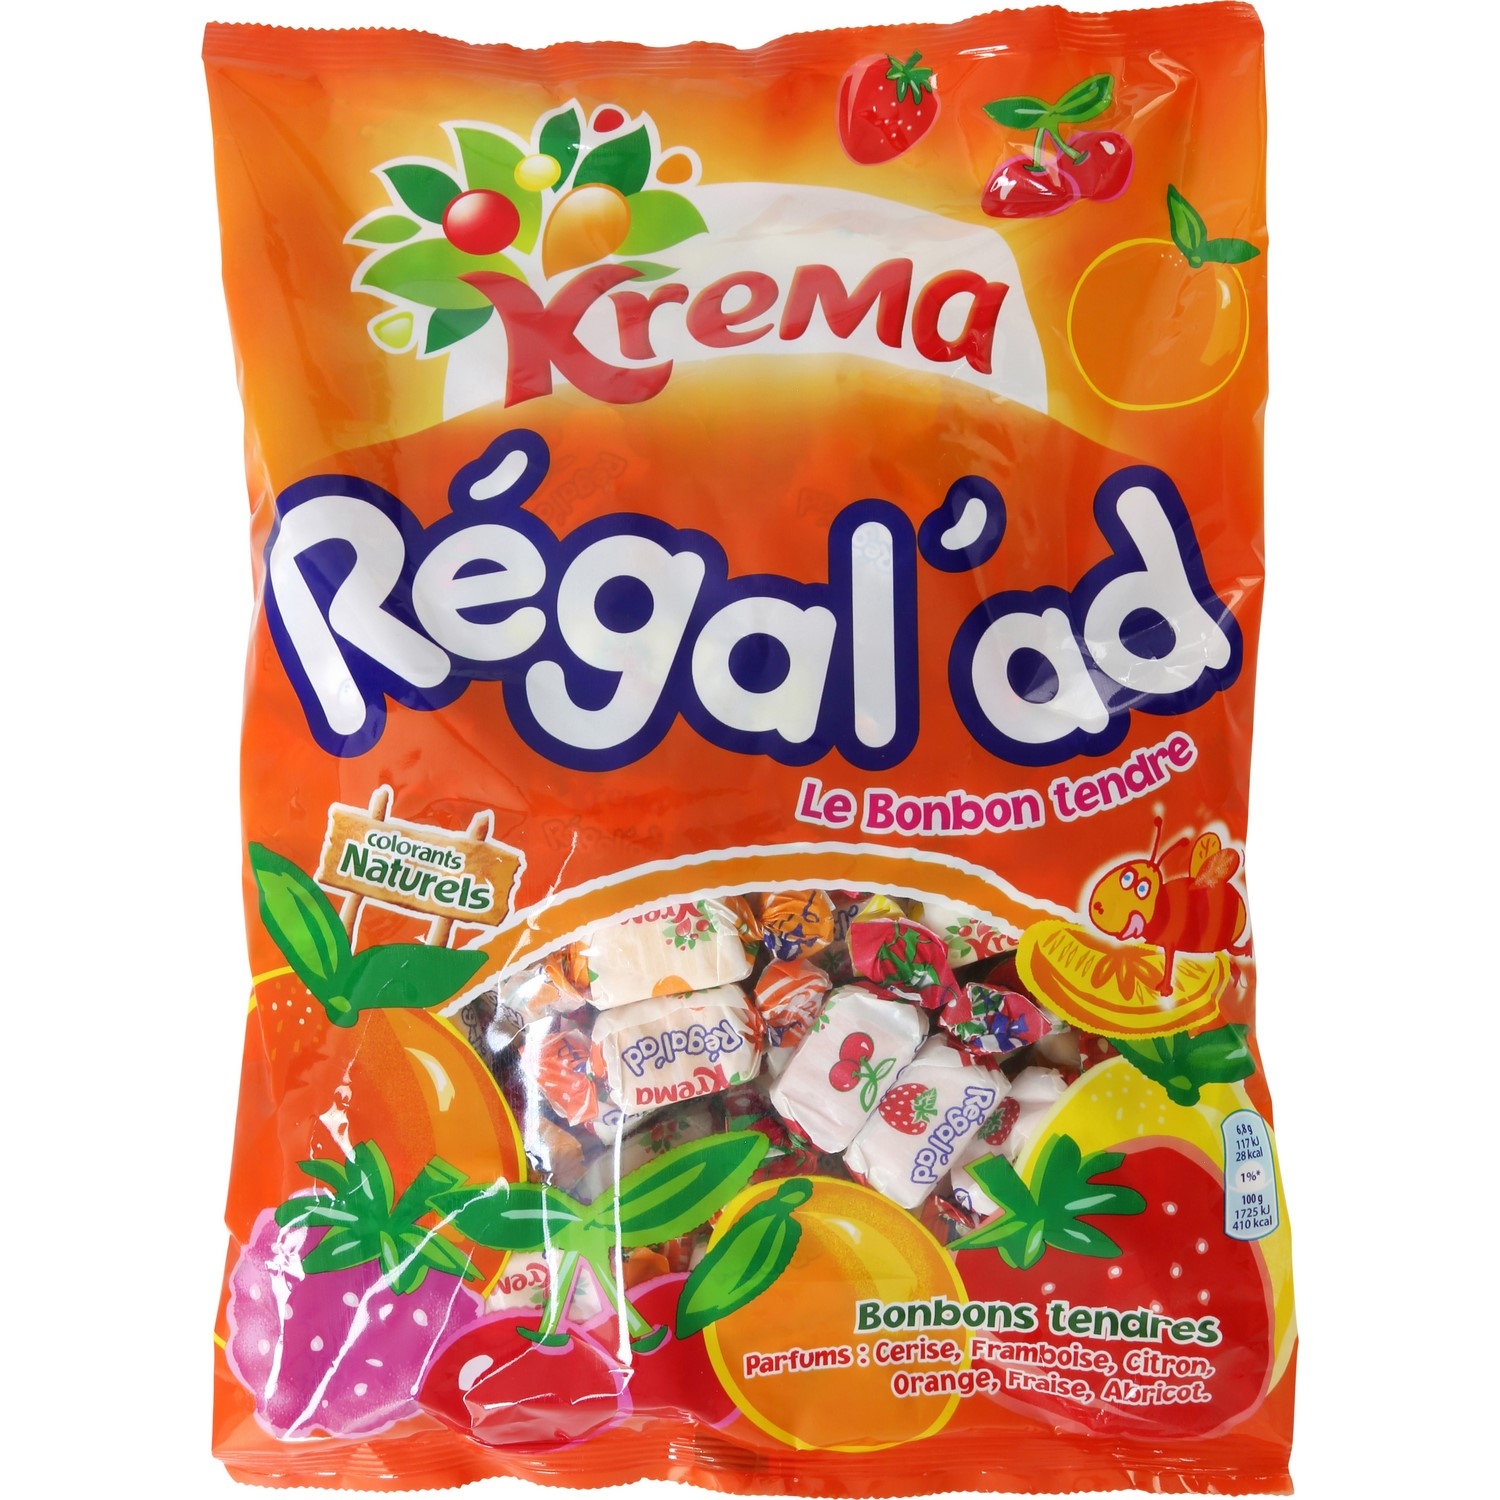 Krema Fruit Krema - Vente de bonbons Krema en ligne